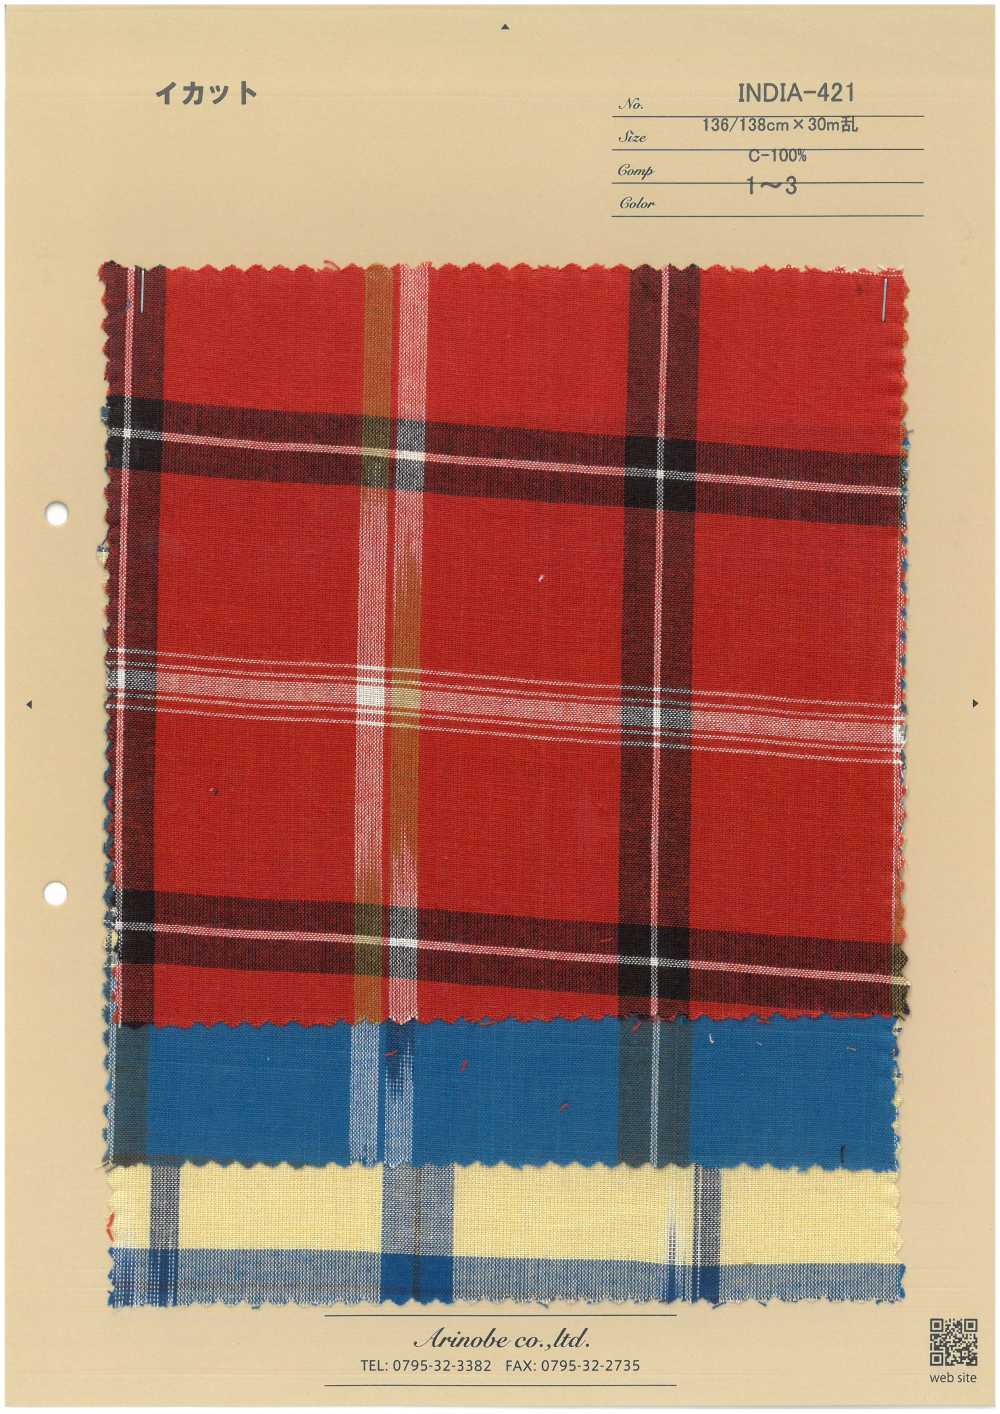 INDIA-421 Ikat[Textile / Fabric] ARINOBE CO., LTD.